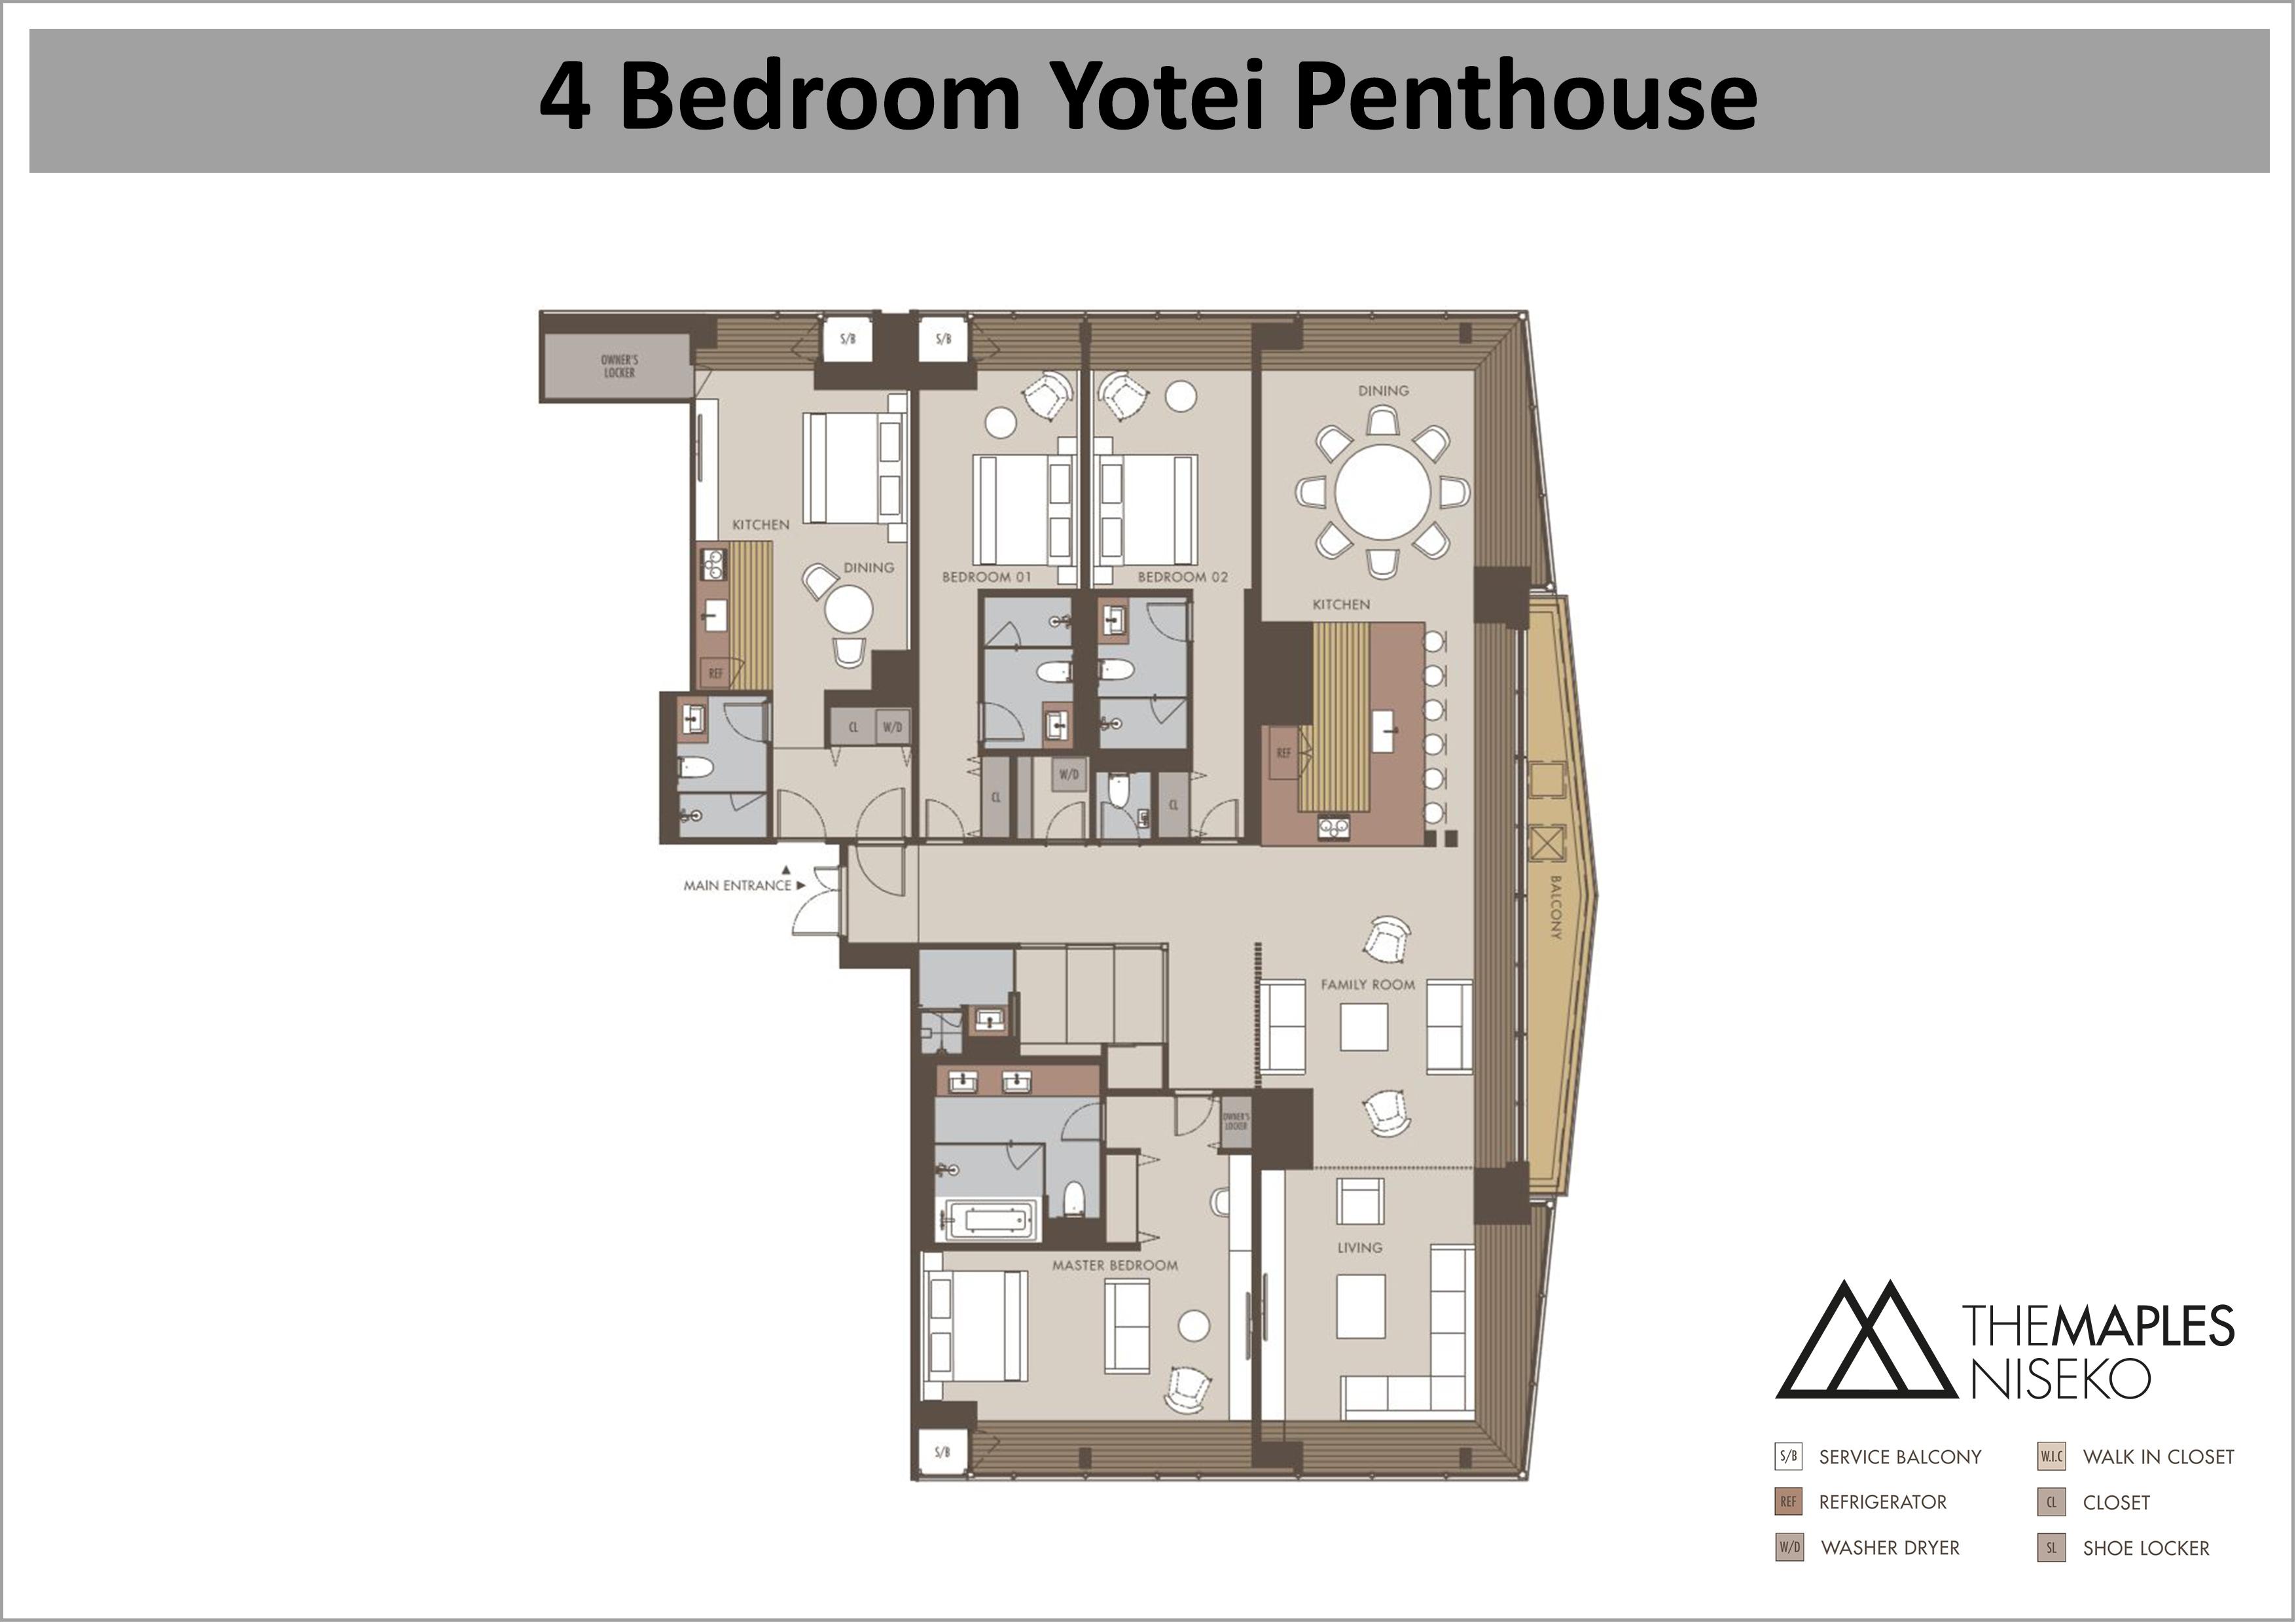 The Maples - 4 Bedroom Yotei Penthouse floor plan